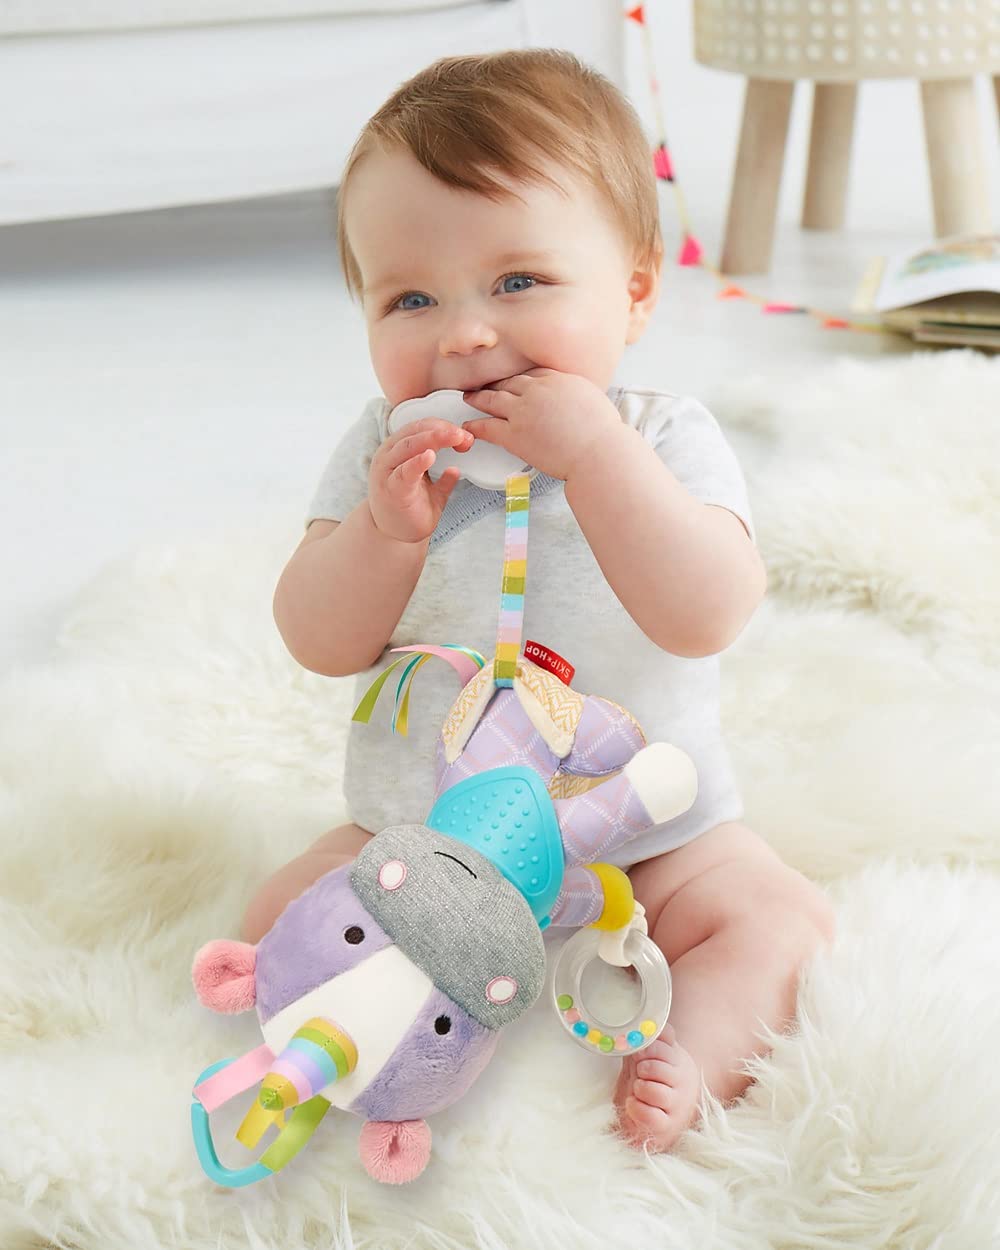 Skip Hop Bandana Buddies Baby Activity and Teething Toy with Multi-Sensory Rattle and Textures, Unicorn